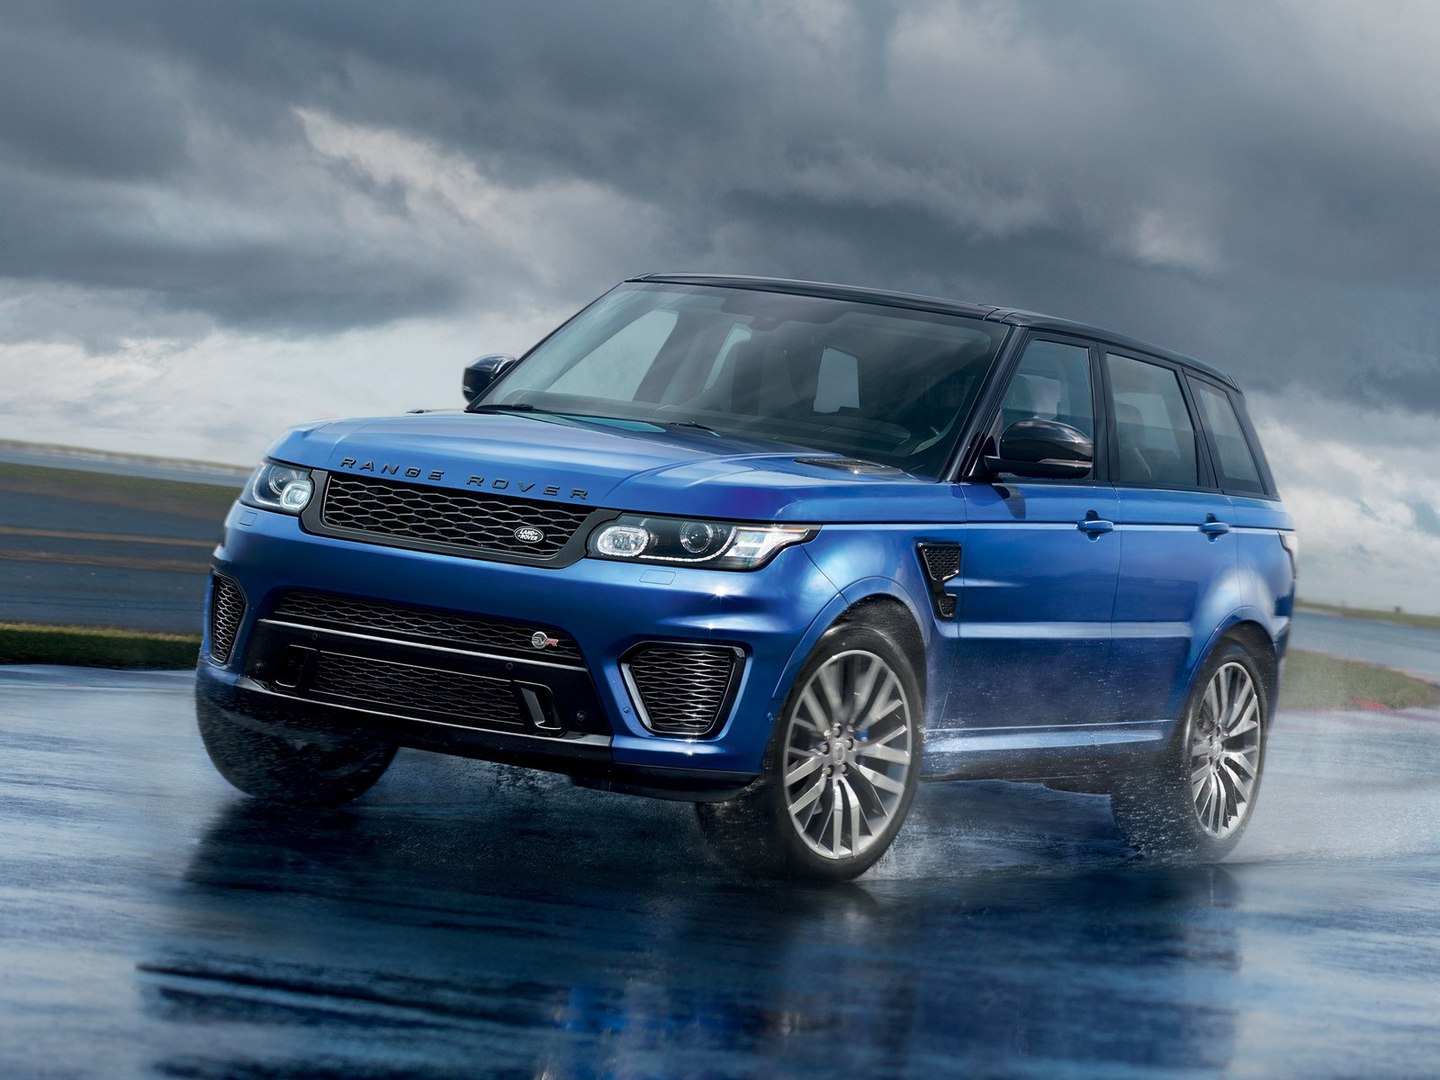 Essai Land Rover Range Rover Sport SVR 2015 - Vidéo Dailymotion